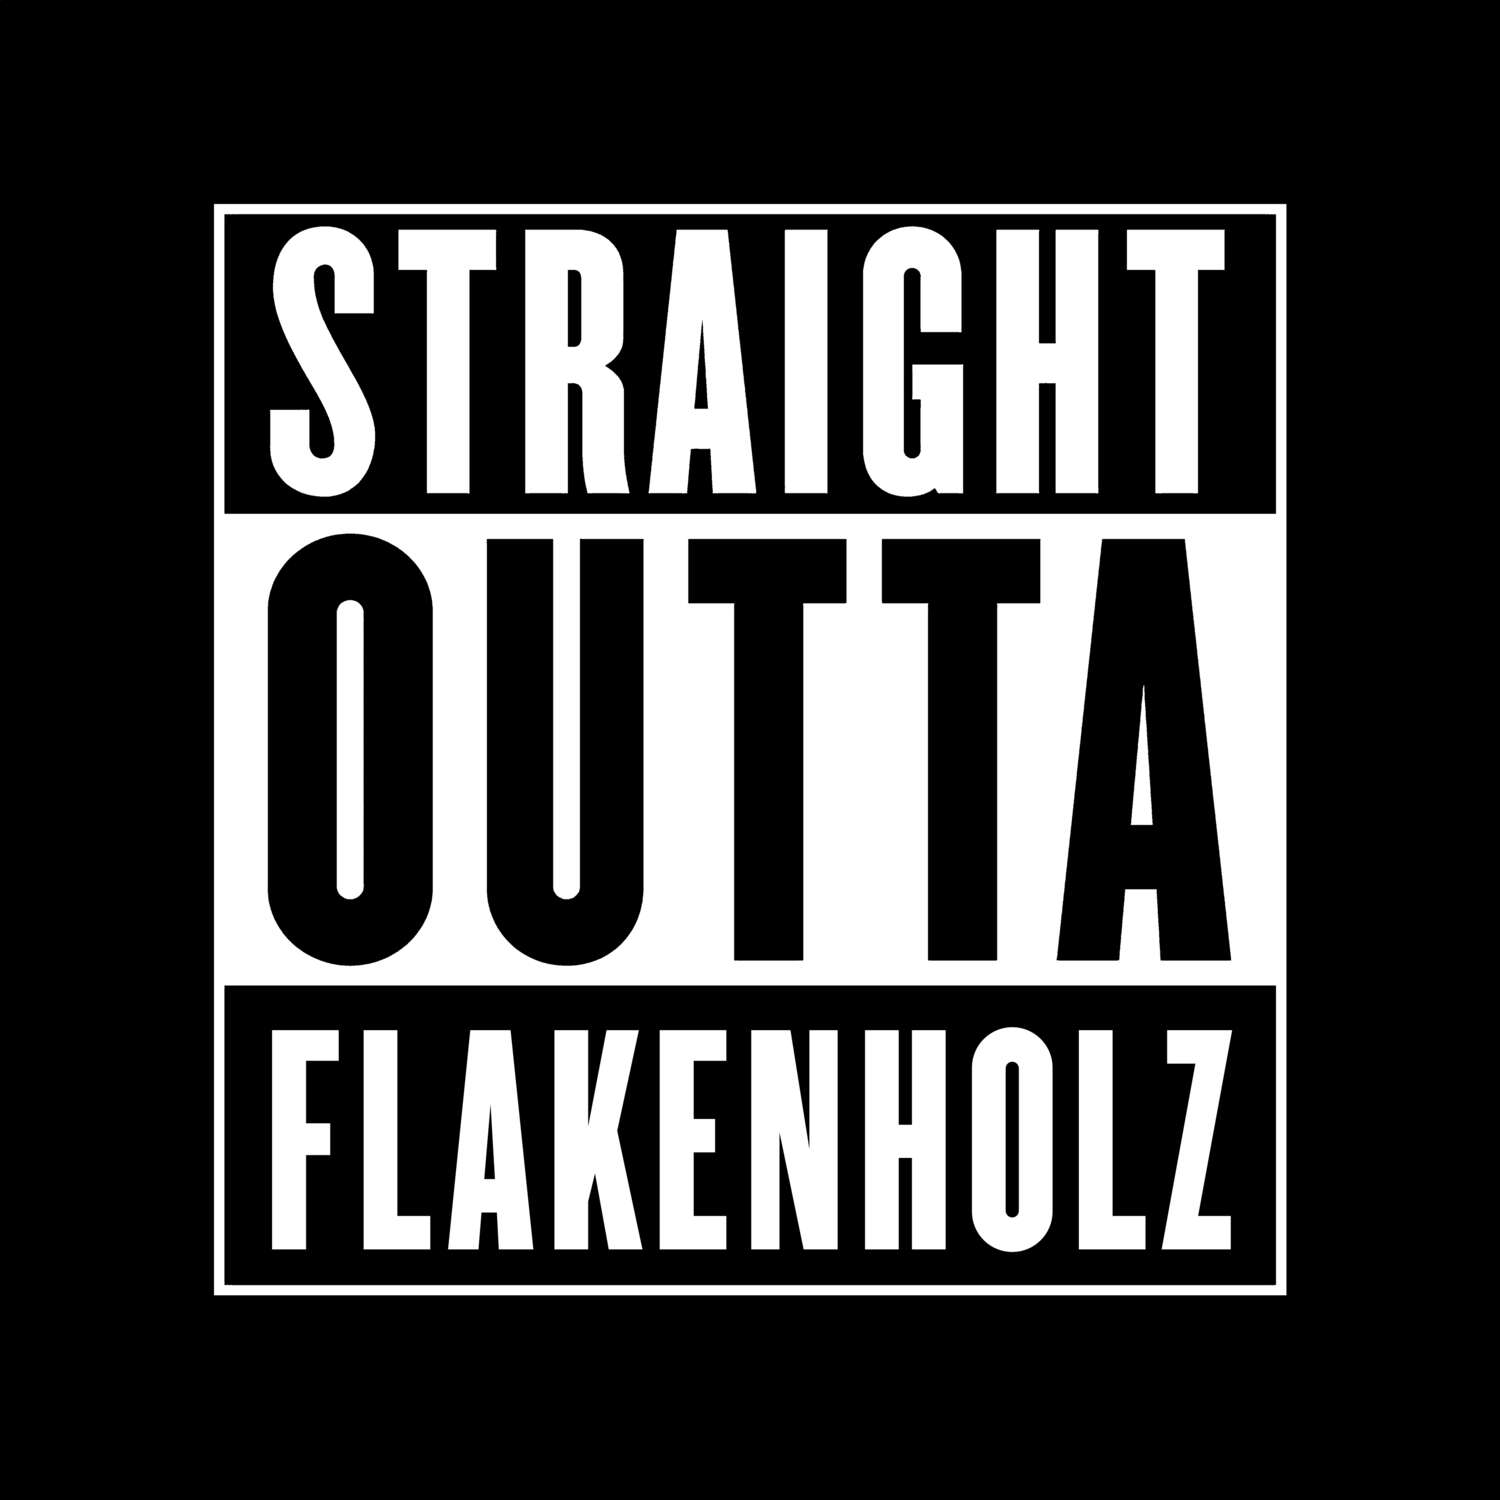 Flakenholz T-Shirt »Straight Outta«